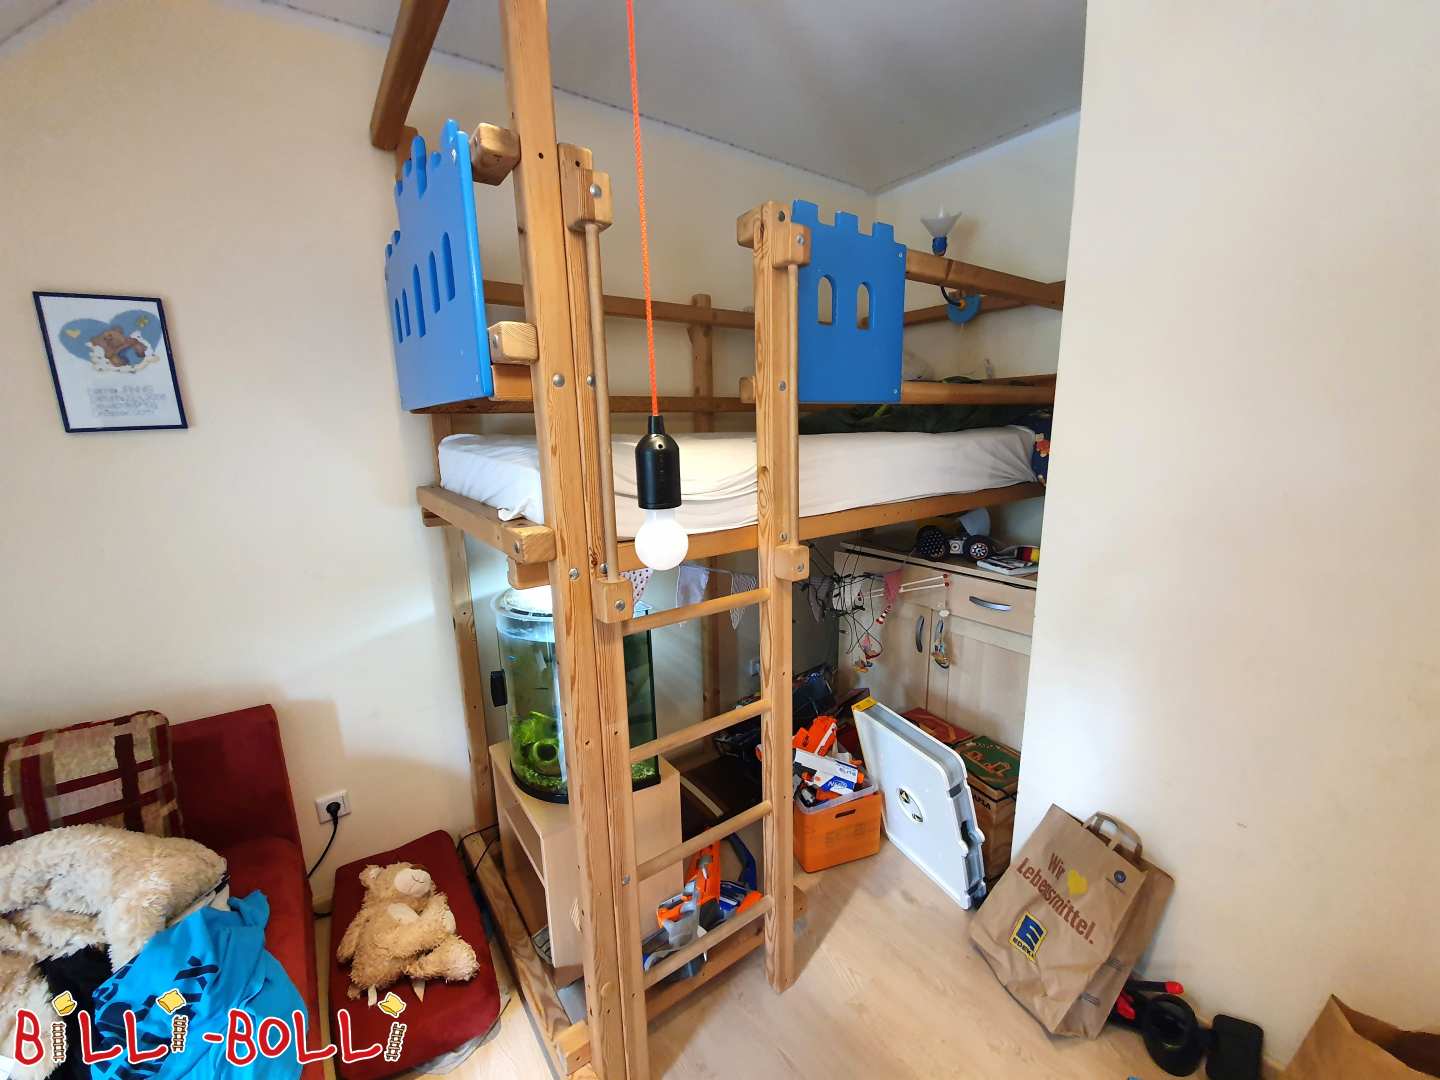 Loft bed in pine untreated – location 33378 Rheda-Wiedenbrück (Category: second hand loft bed)